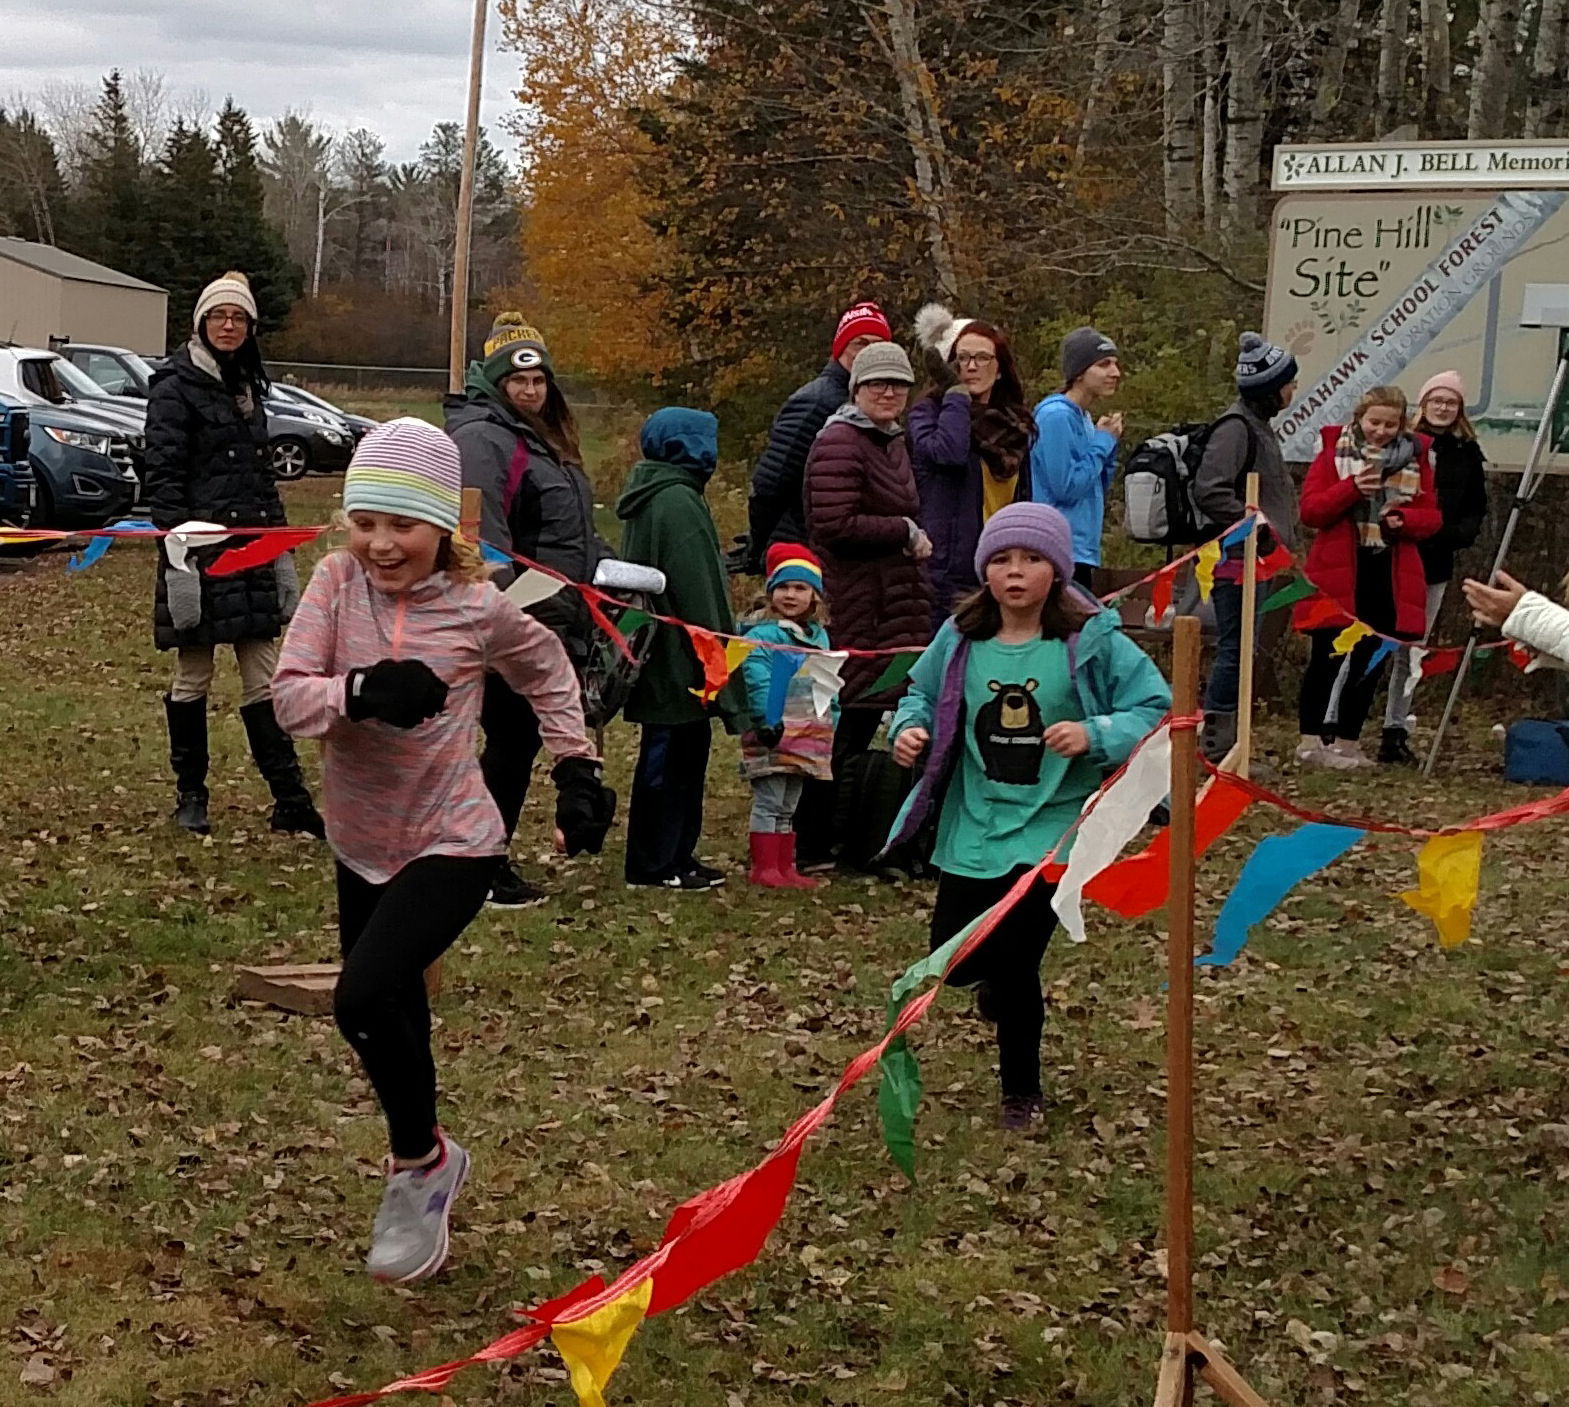 Local students take part in first annual “fun run” on Allan Bell Memorial Trail